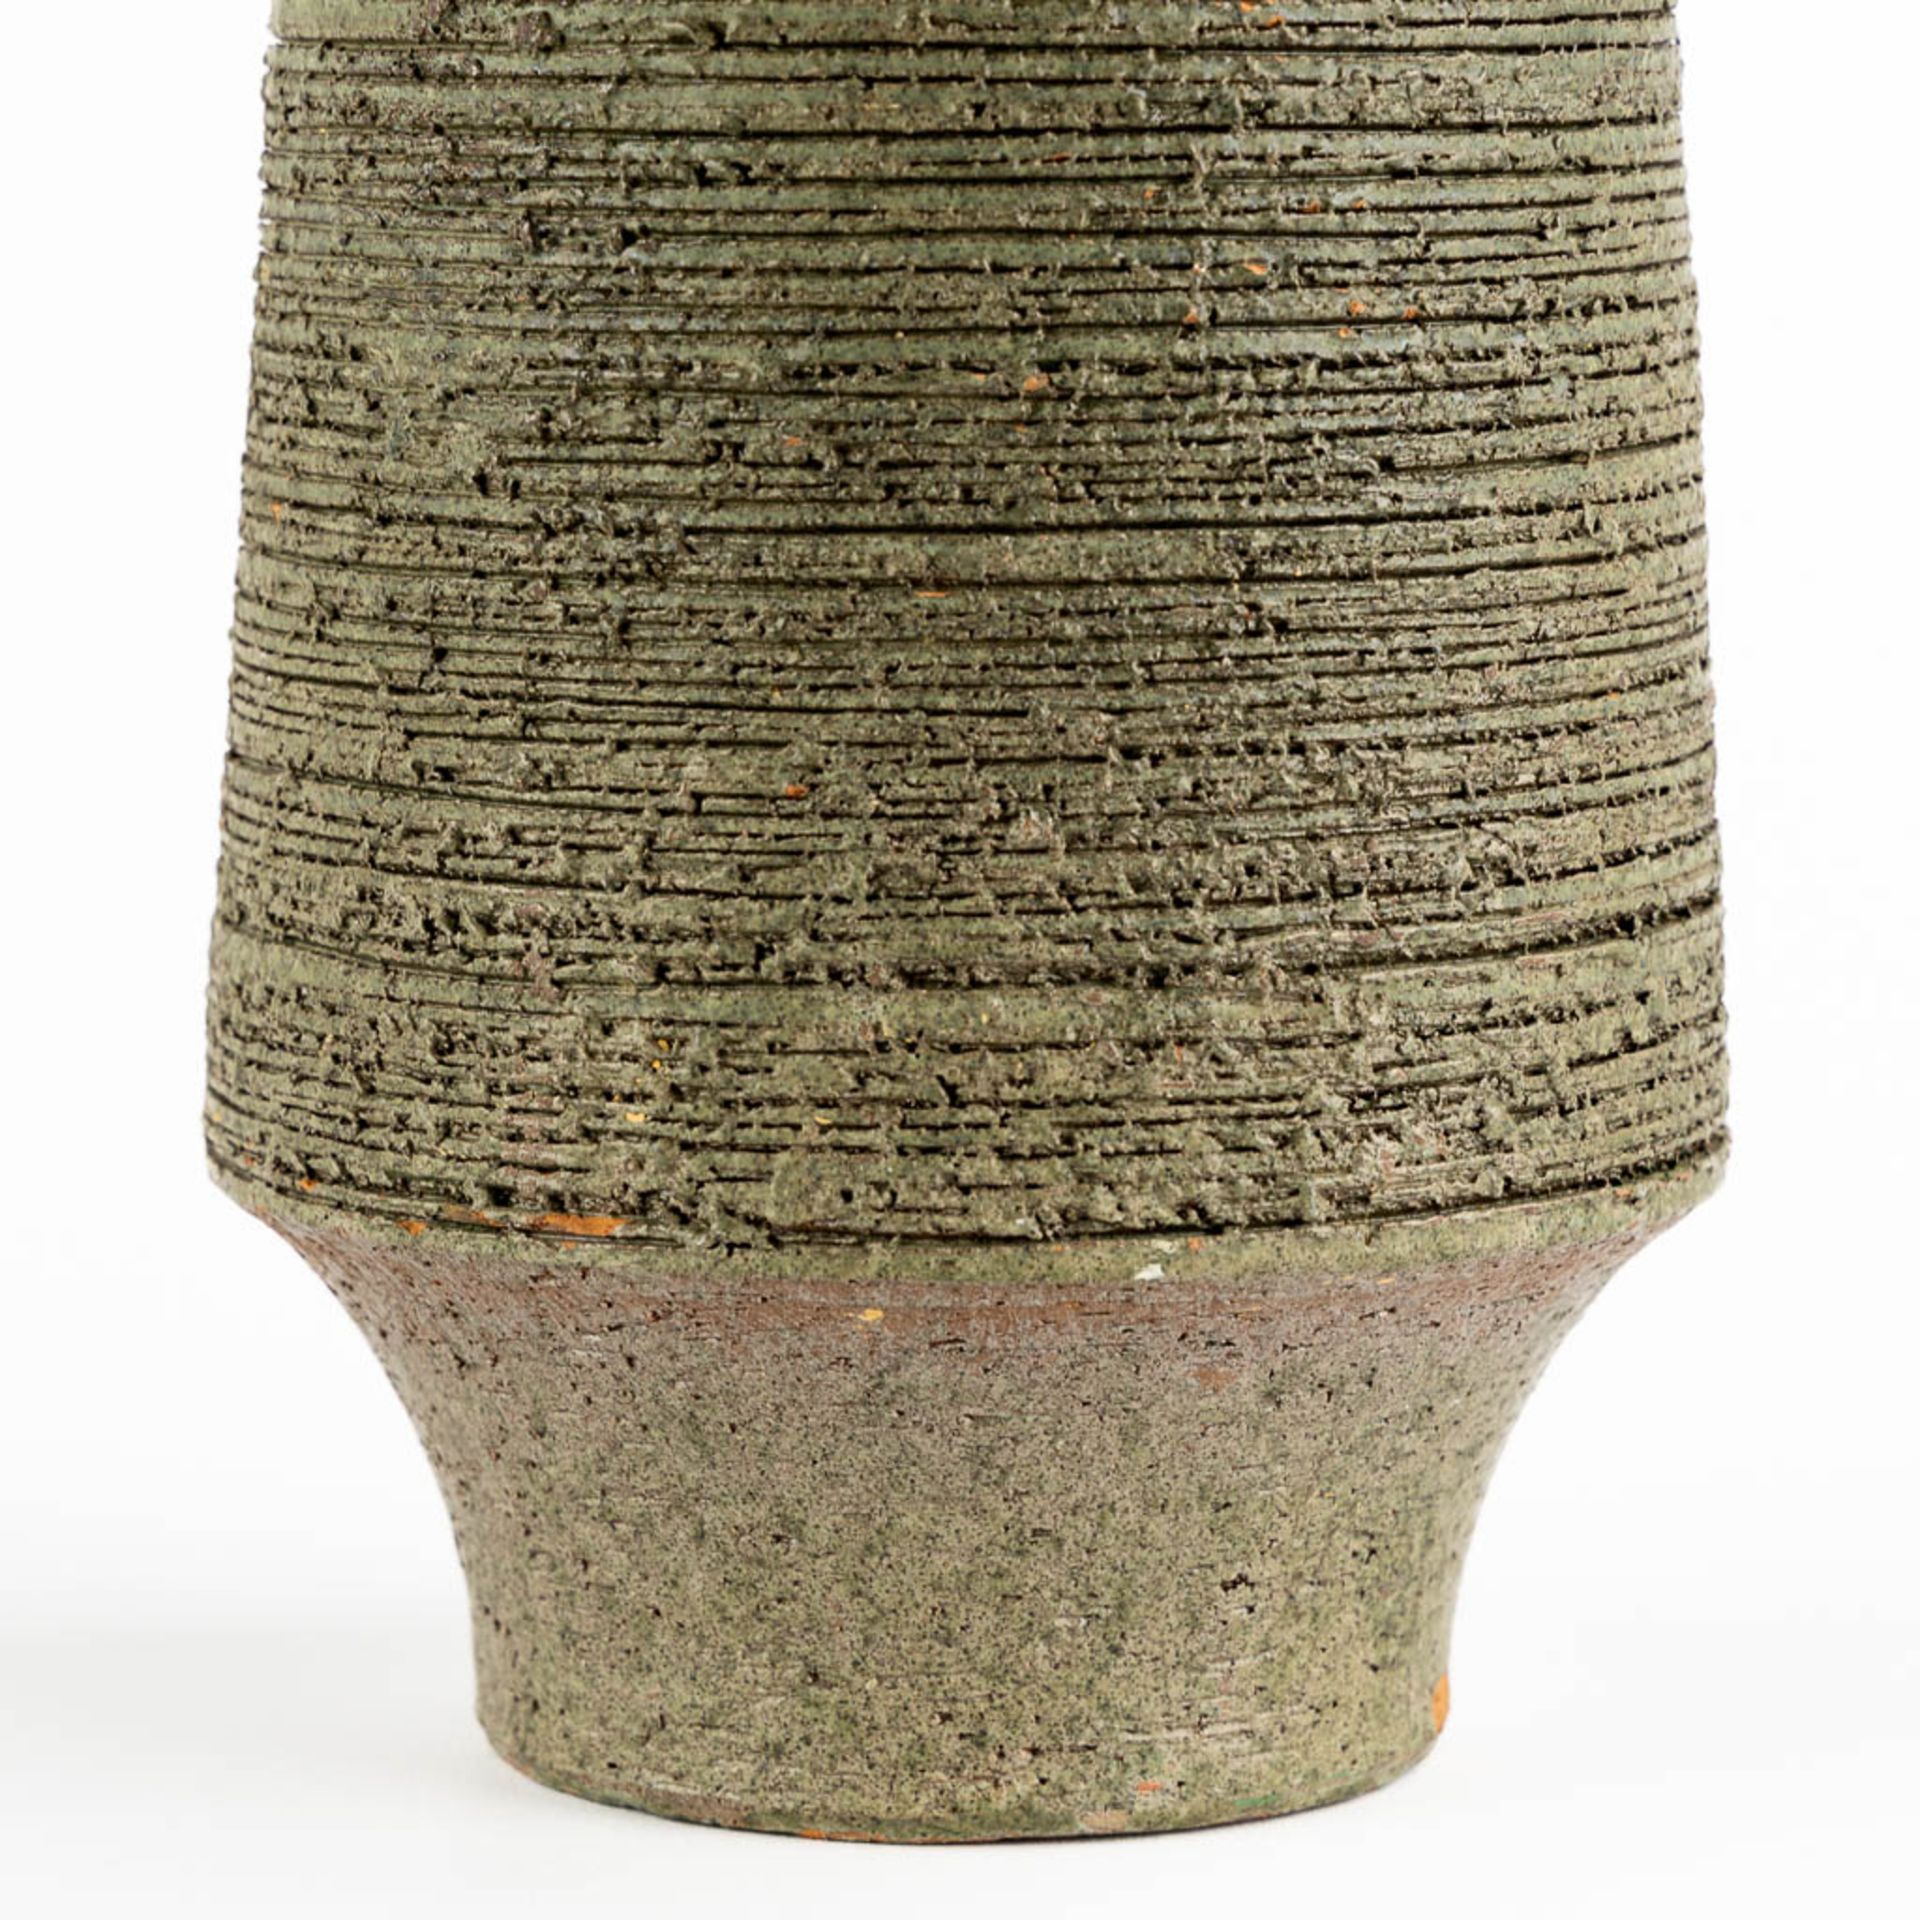 Amphora or Keramar, a large green vase, glazed ceramics. (H:53 x D:14 cm) - Bild 7 aus 10